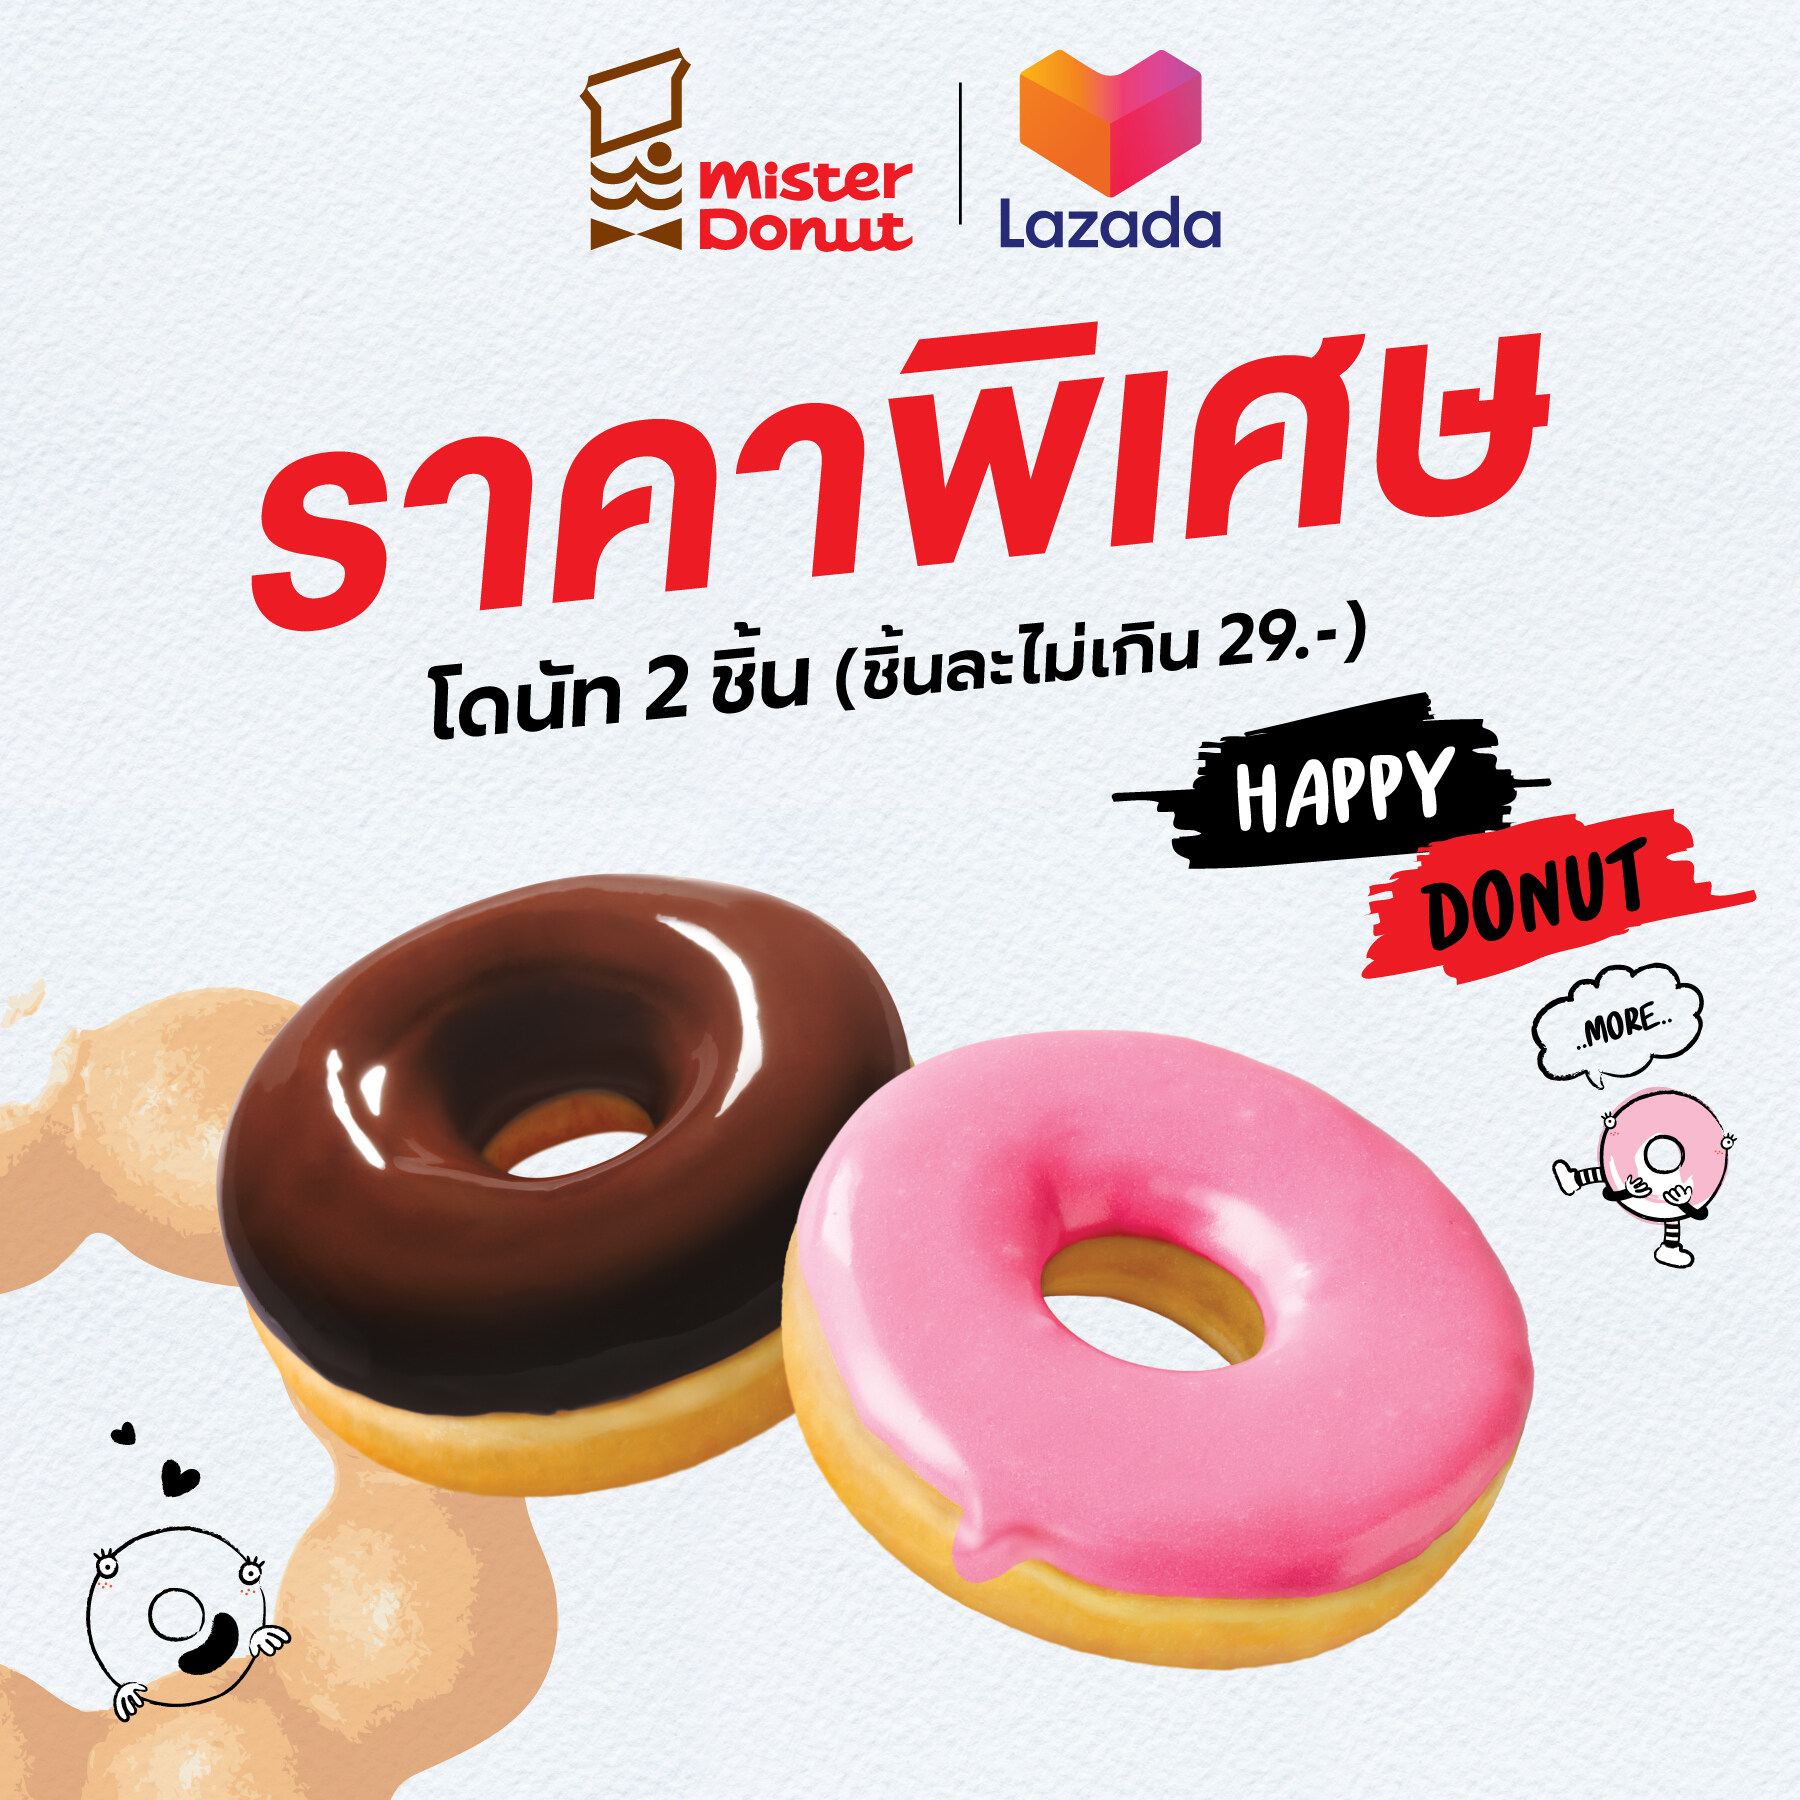 [E-Voucher] Mister Donut - Donut 2 pcs. (not exceed 29.-/pc.)/ มิสเตอร์ โดนัท - โดนัท 2 ชิ้น (ชิ้นละไม่เกิน 29.-)